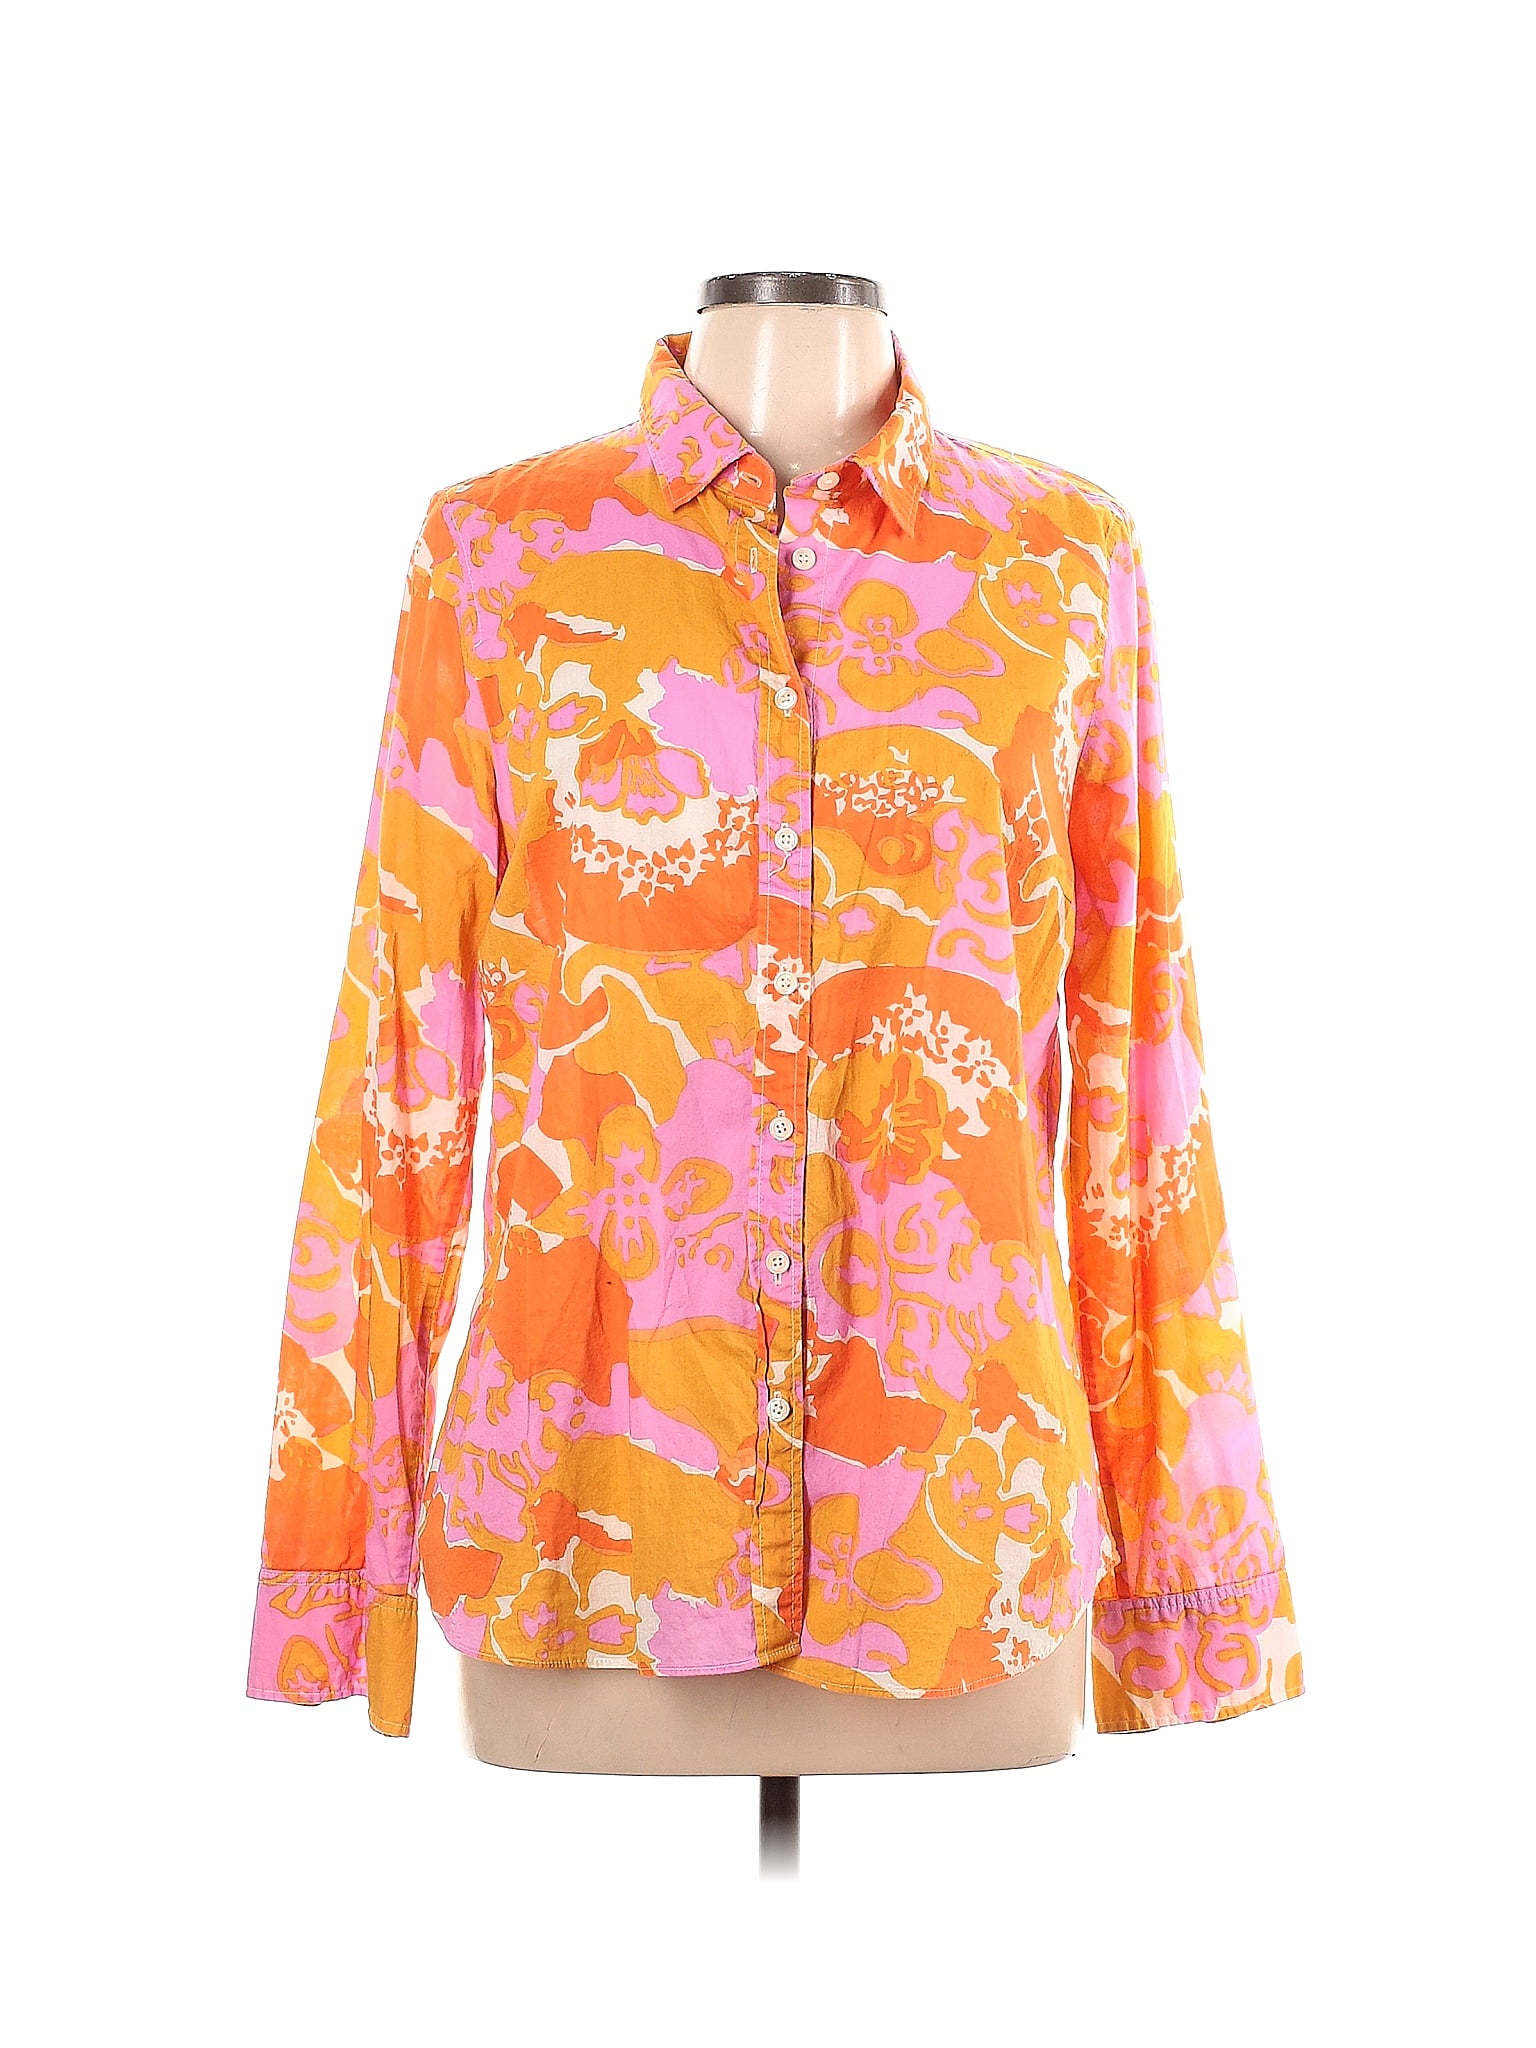 J.Crew Factory Store Floral Orange Long Sleeve Button-Down Shirt Size L ...